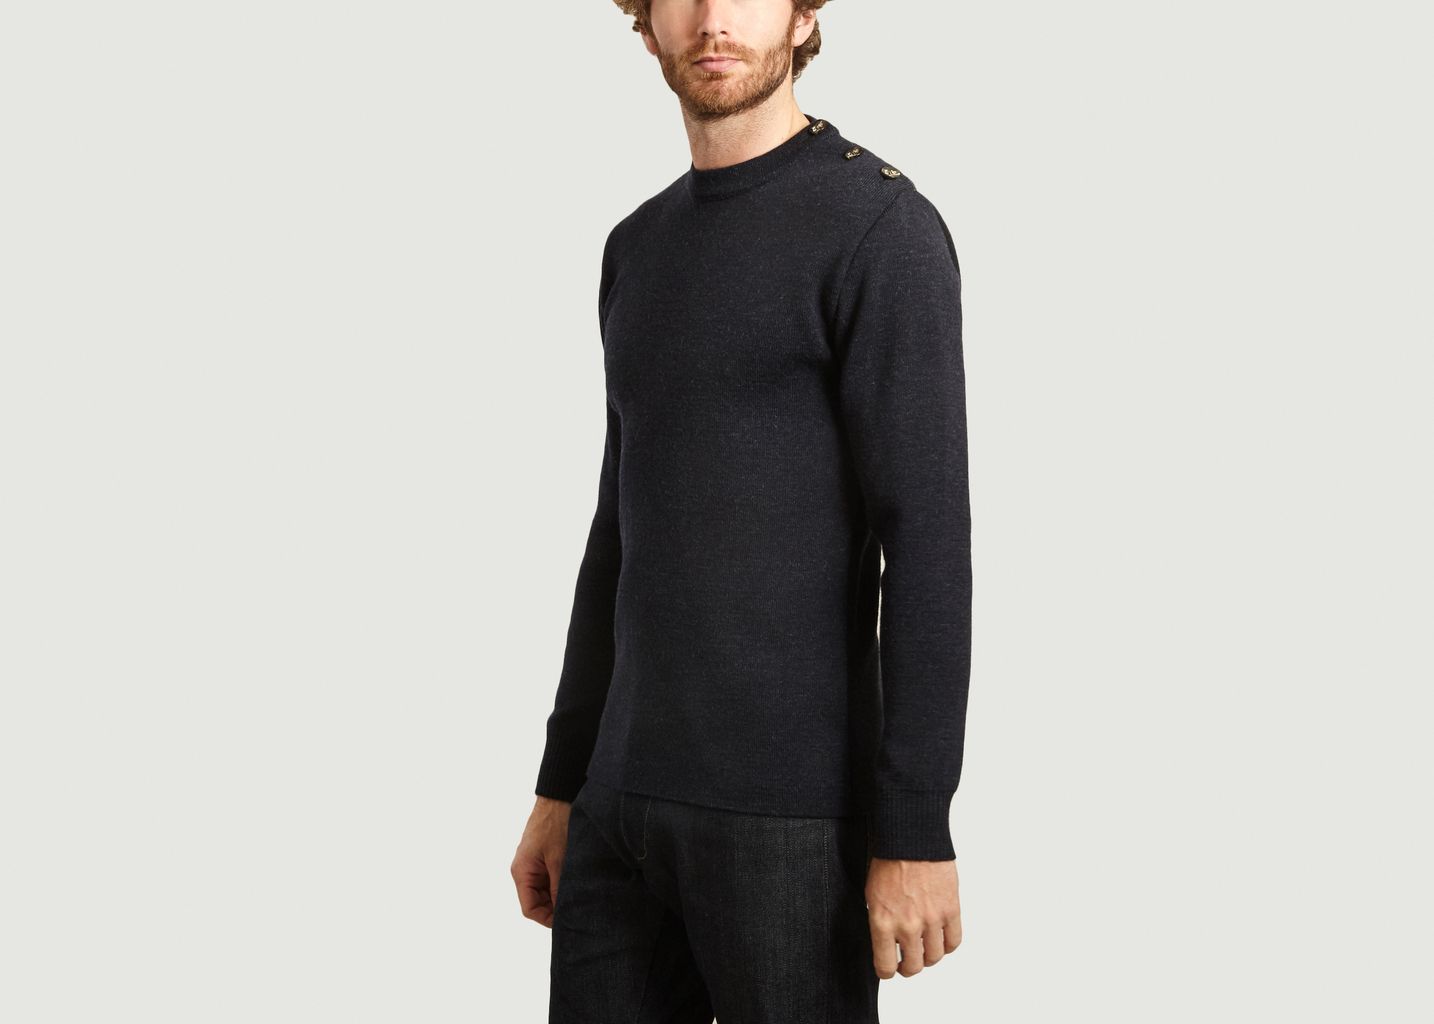 Erquy virgin wool sweater - Outland